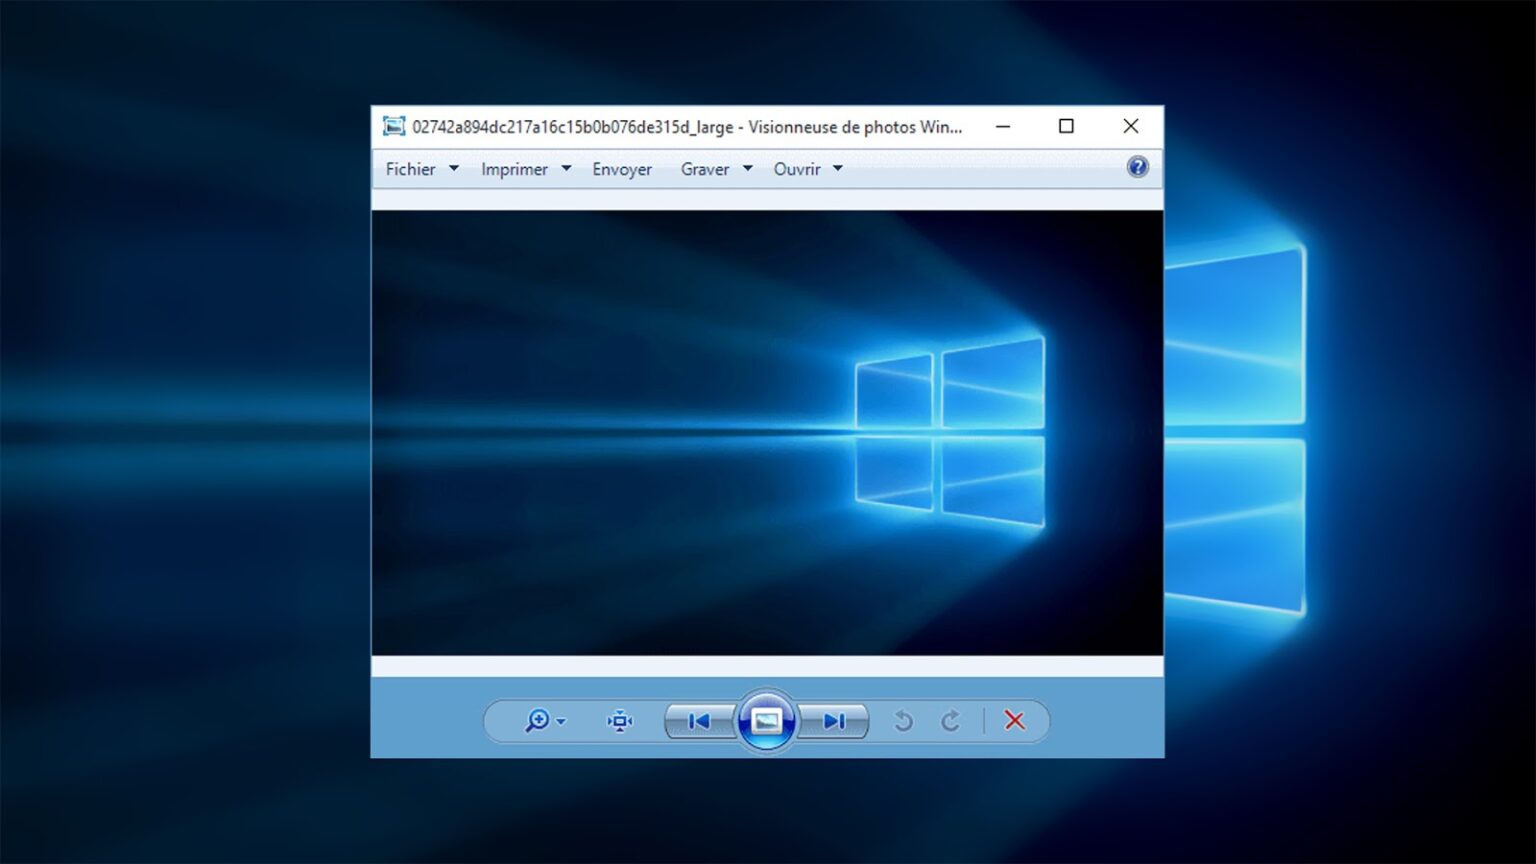 microsoft windows 10 photo viewer download